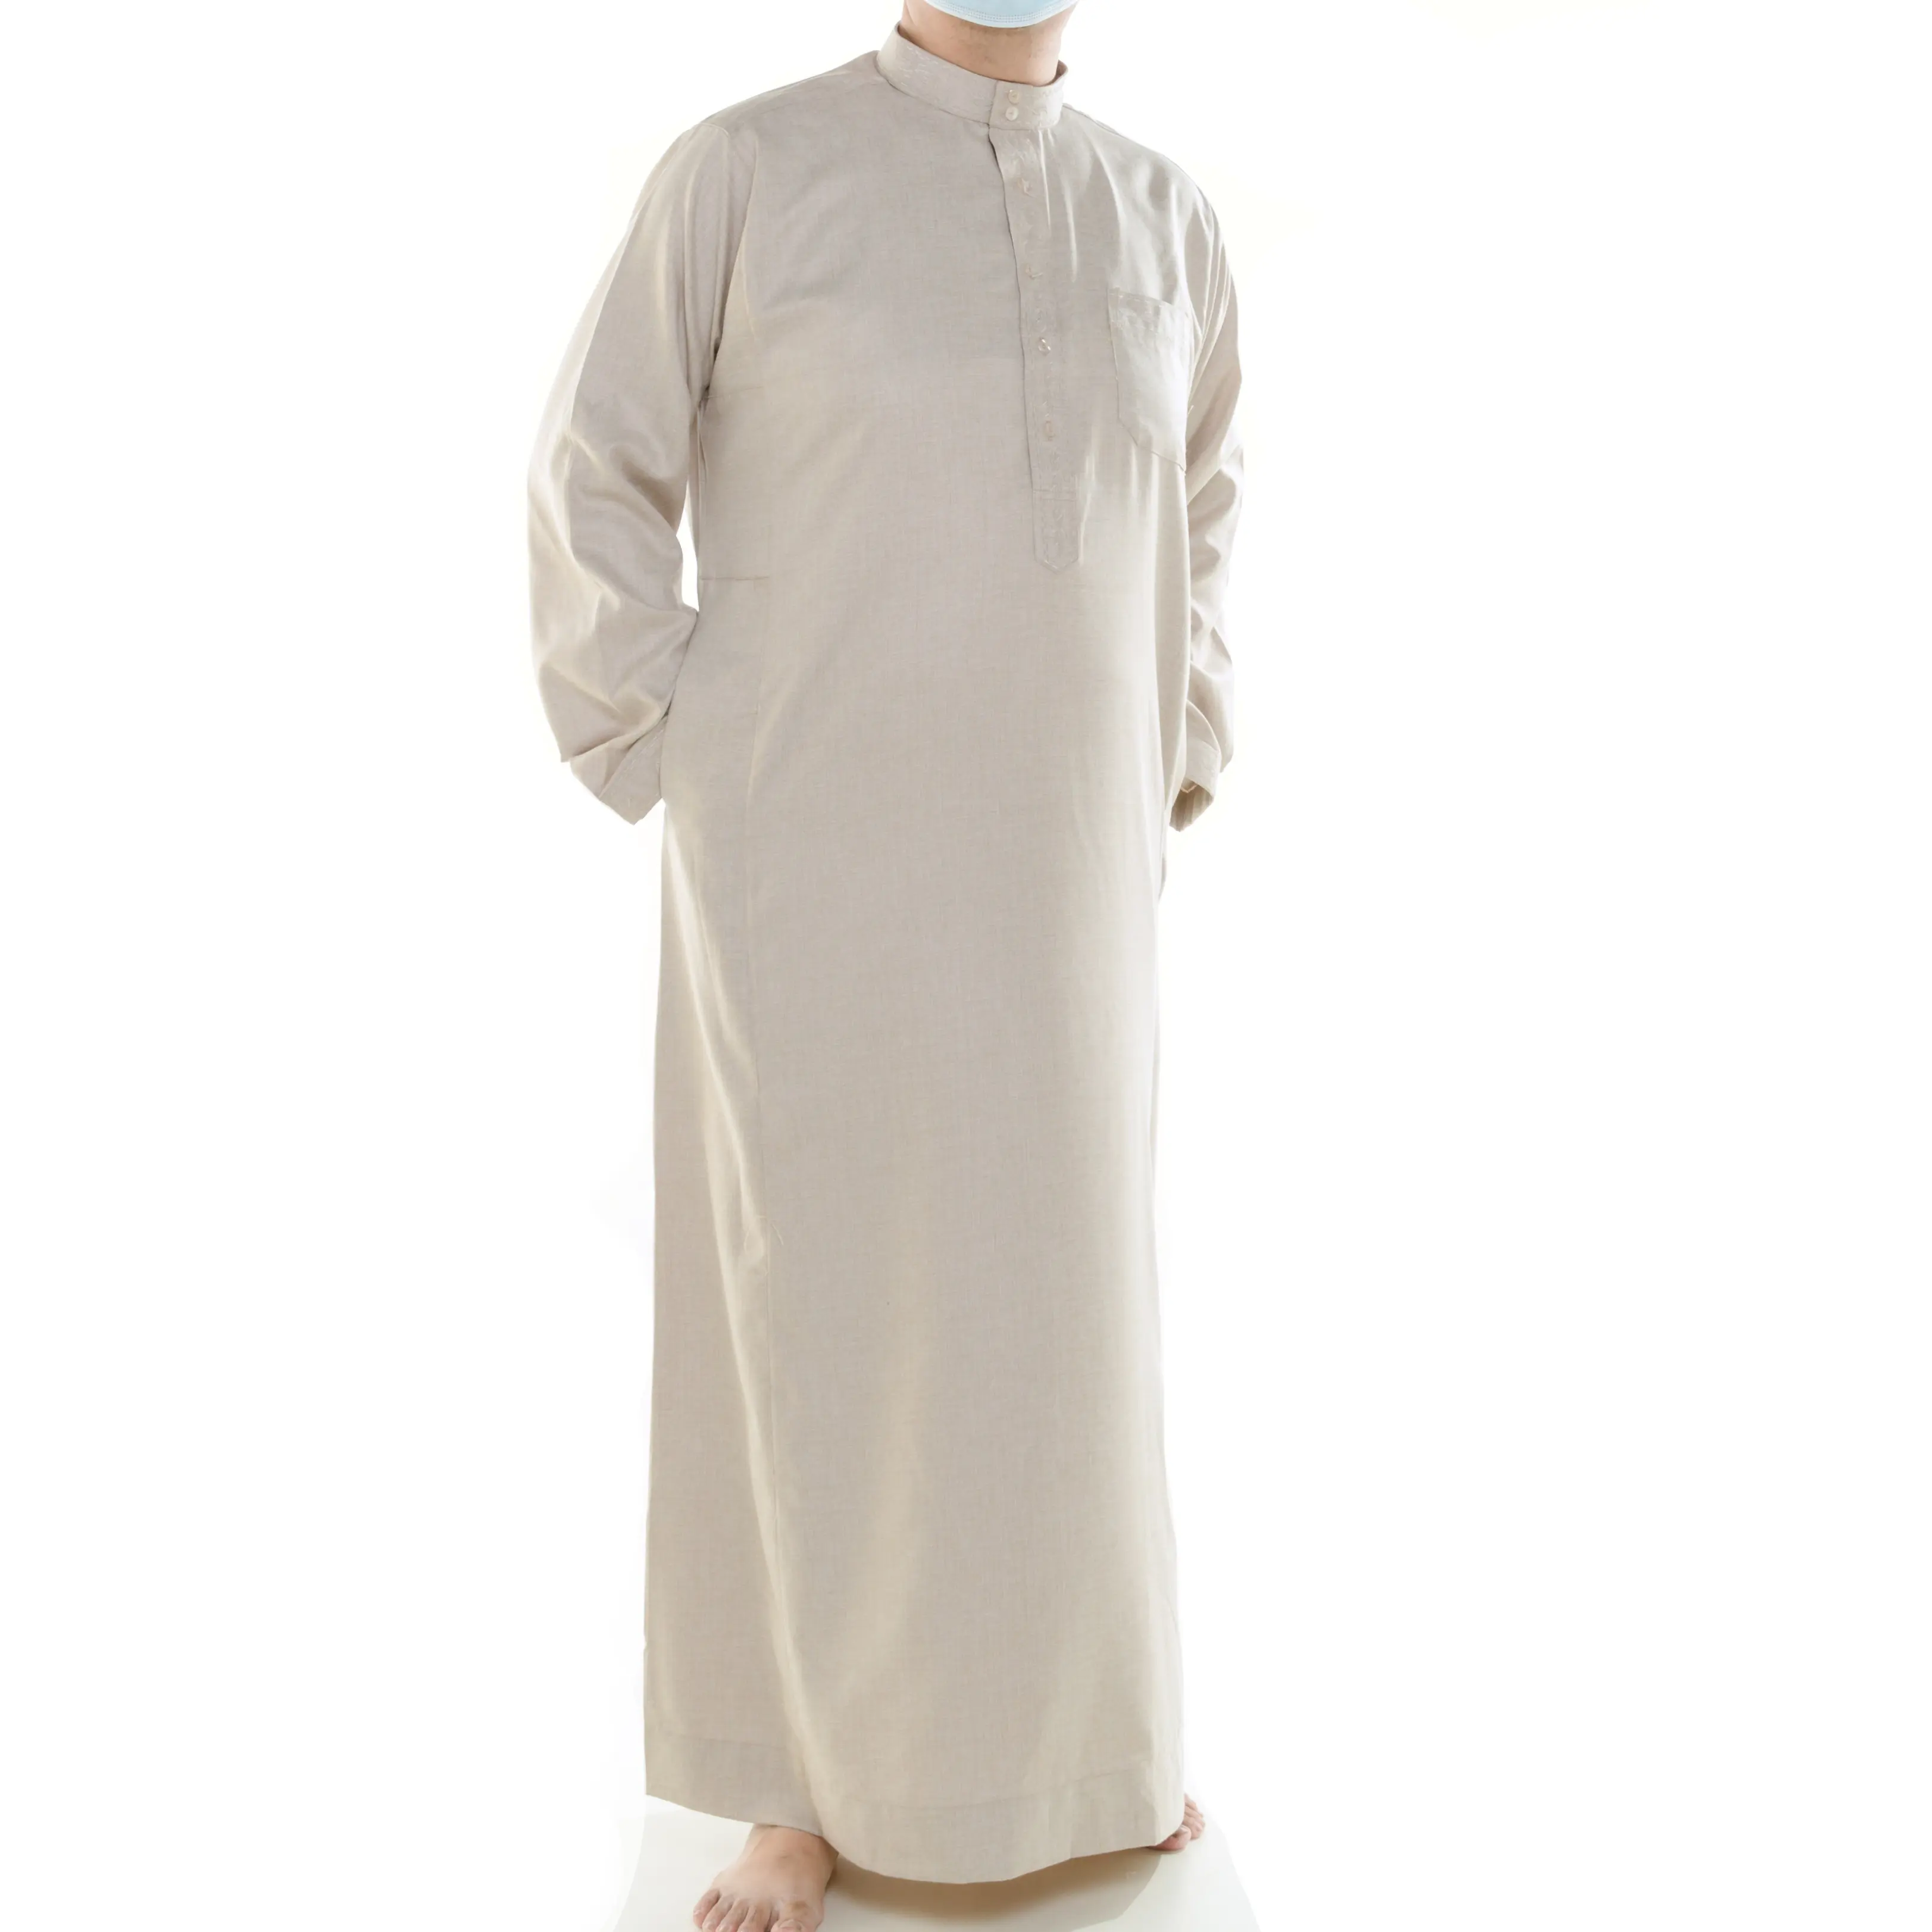 New White Colors Alharamain Saudi Turkish Thope For Men Fashion Wear Baju Koko Jubah Muslim Abaya Men